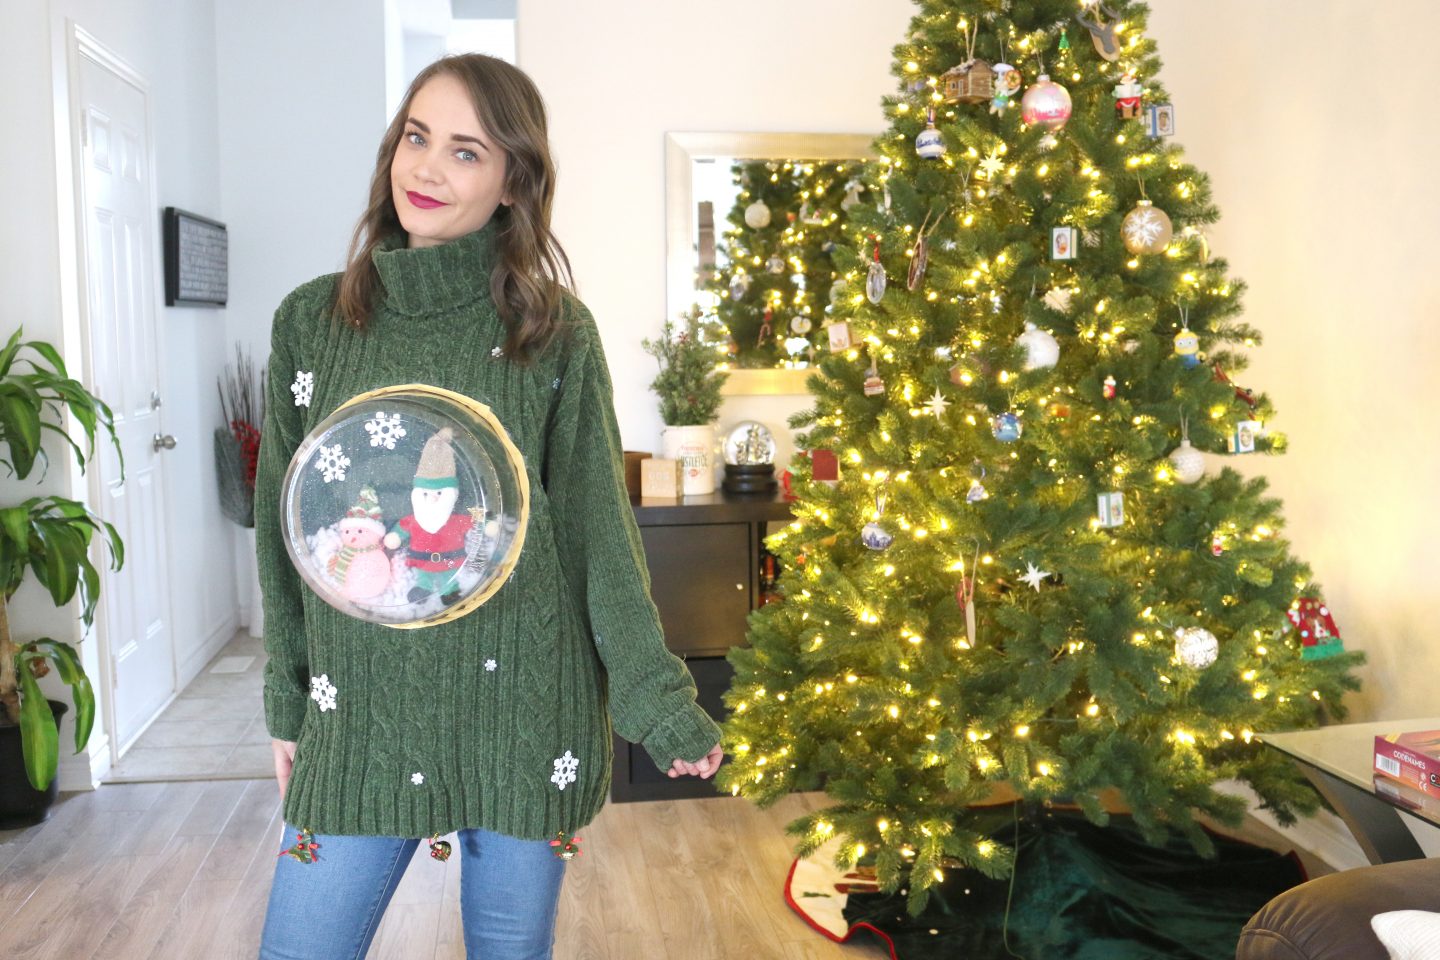 DIY Ugly Christmas Snow Globe Sweater